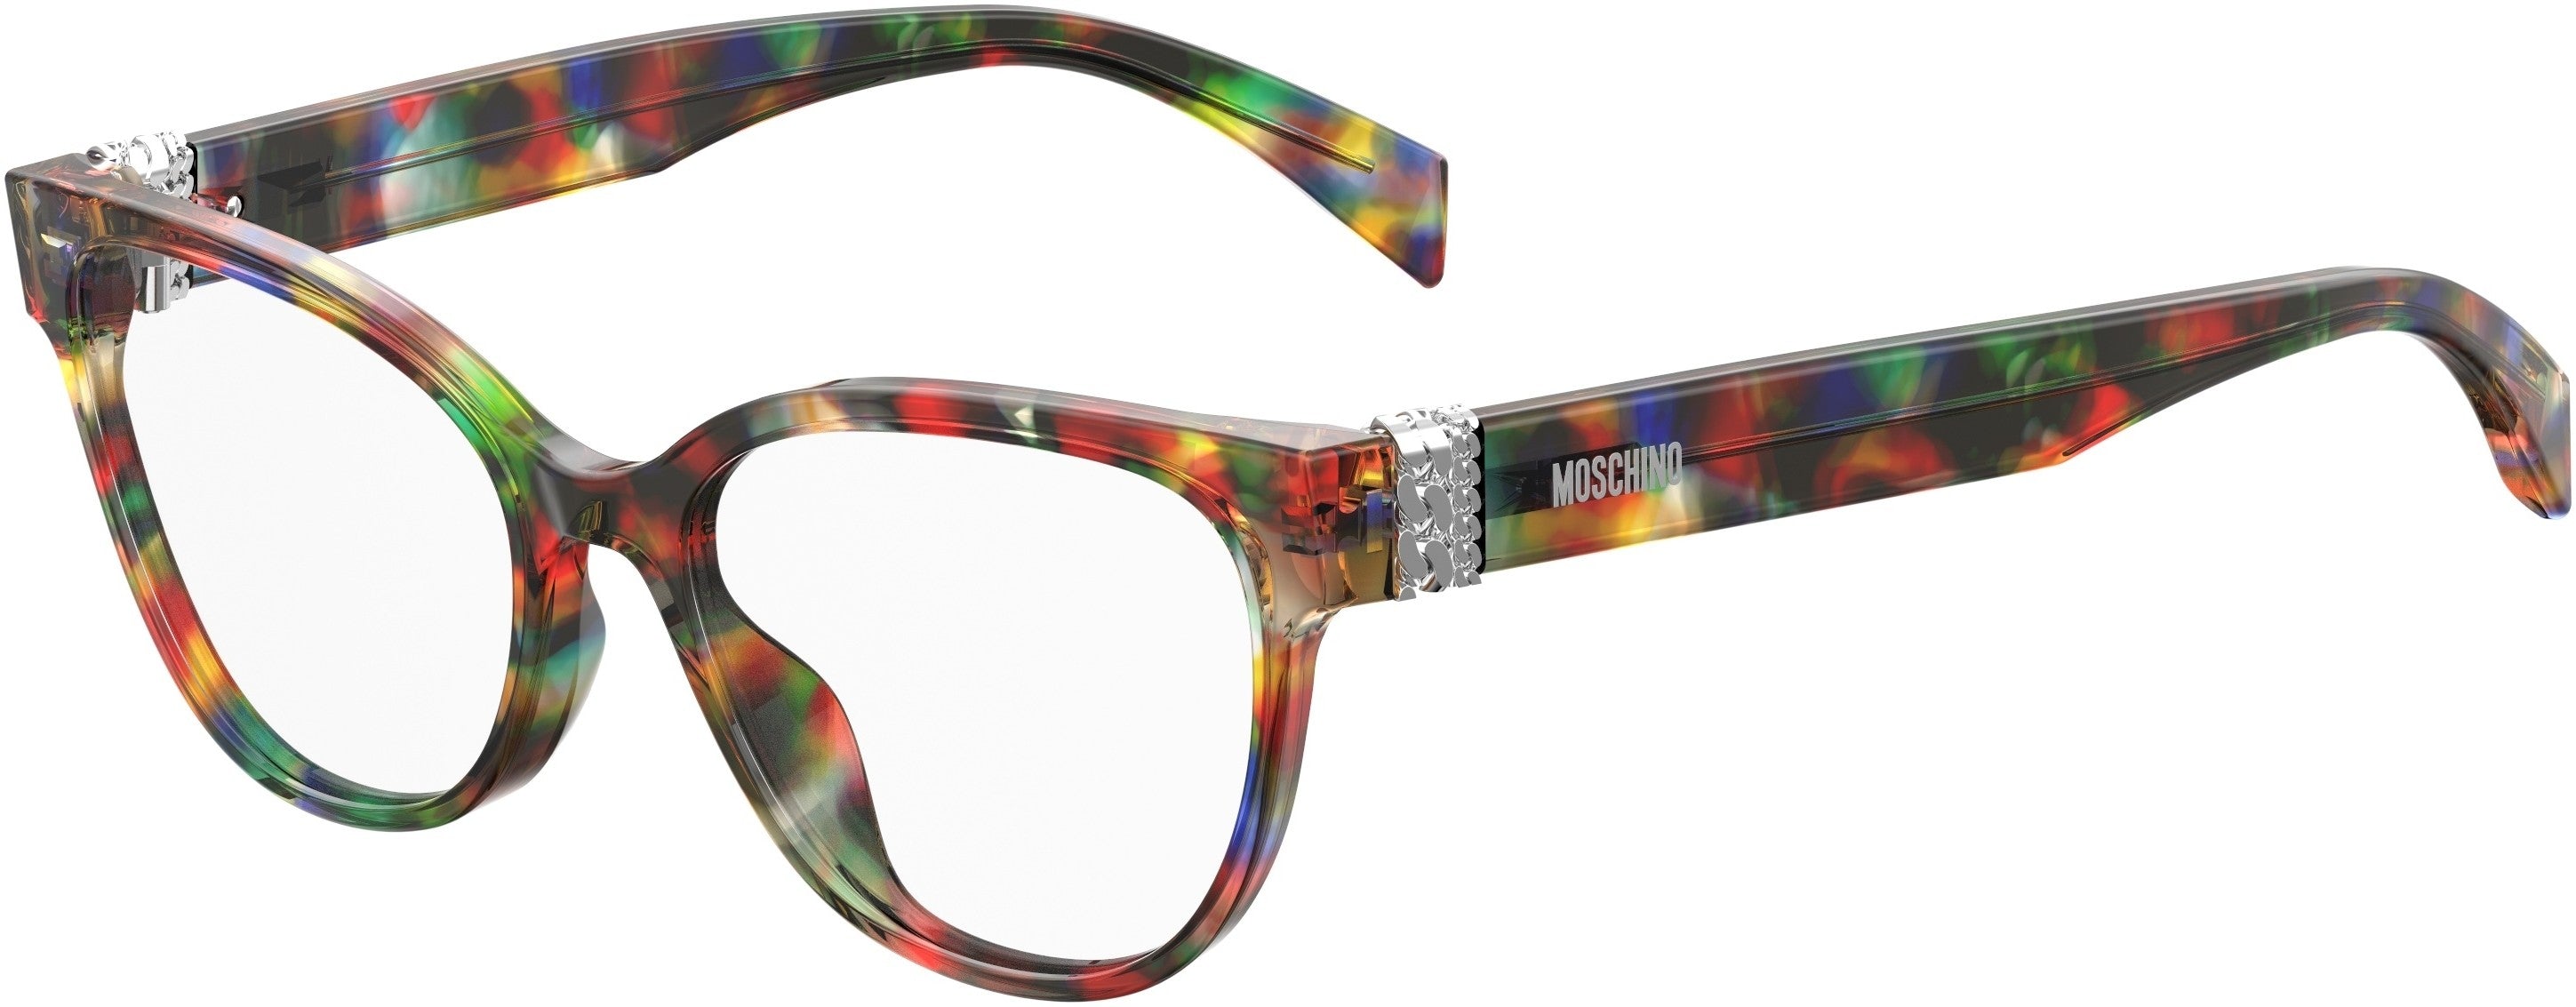  Moschino 509 Oval Modified Eyeglasses 0F74-0F74  Purple Blmkor (00 Demo Lens)